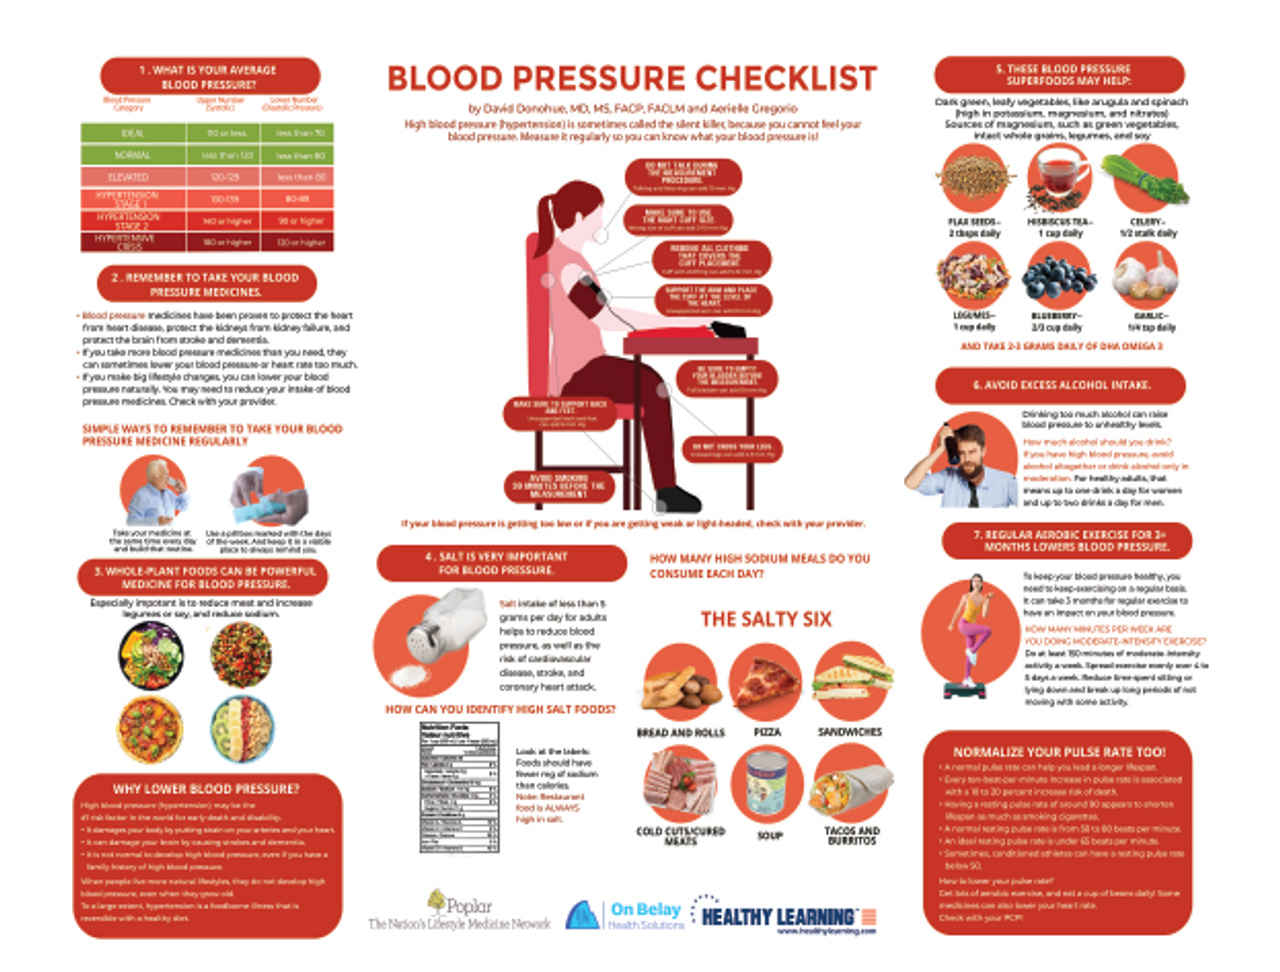 Blood pressure measurement checklist - Resolve to Save Lives